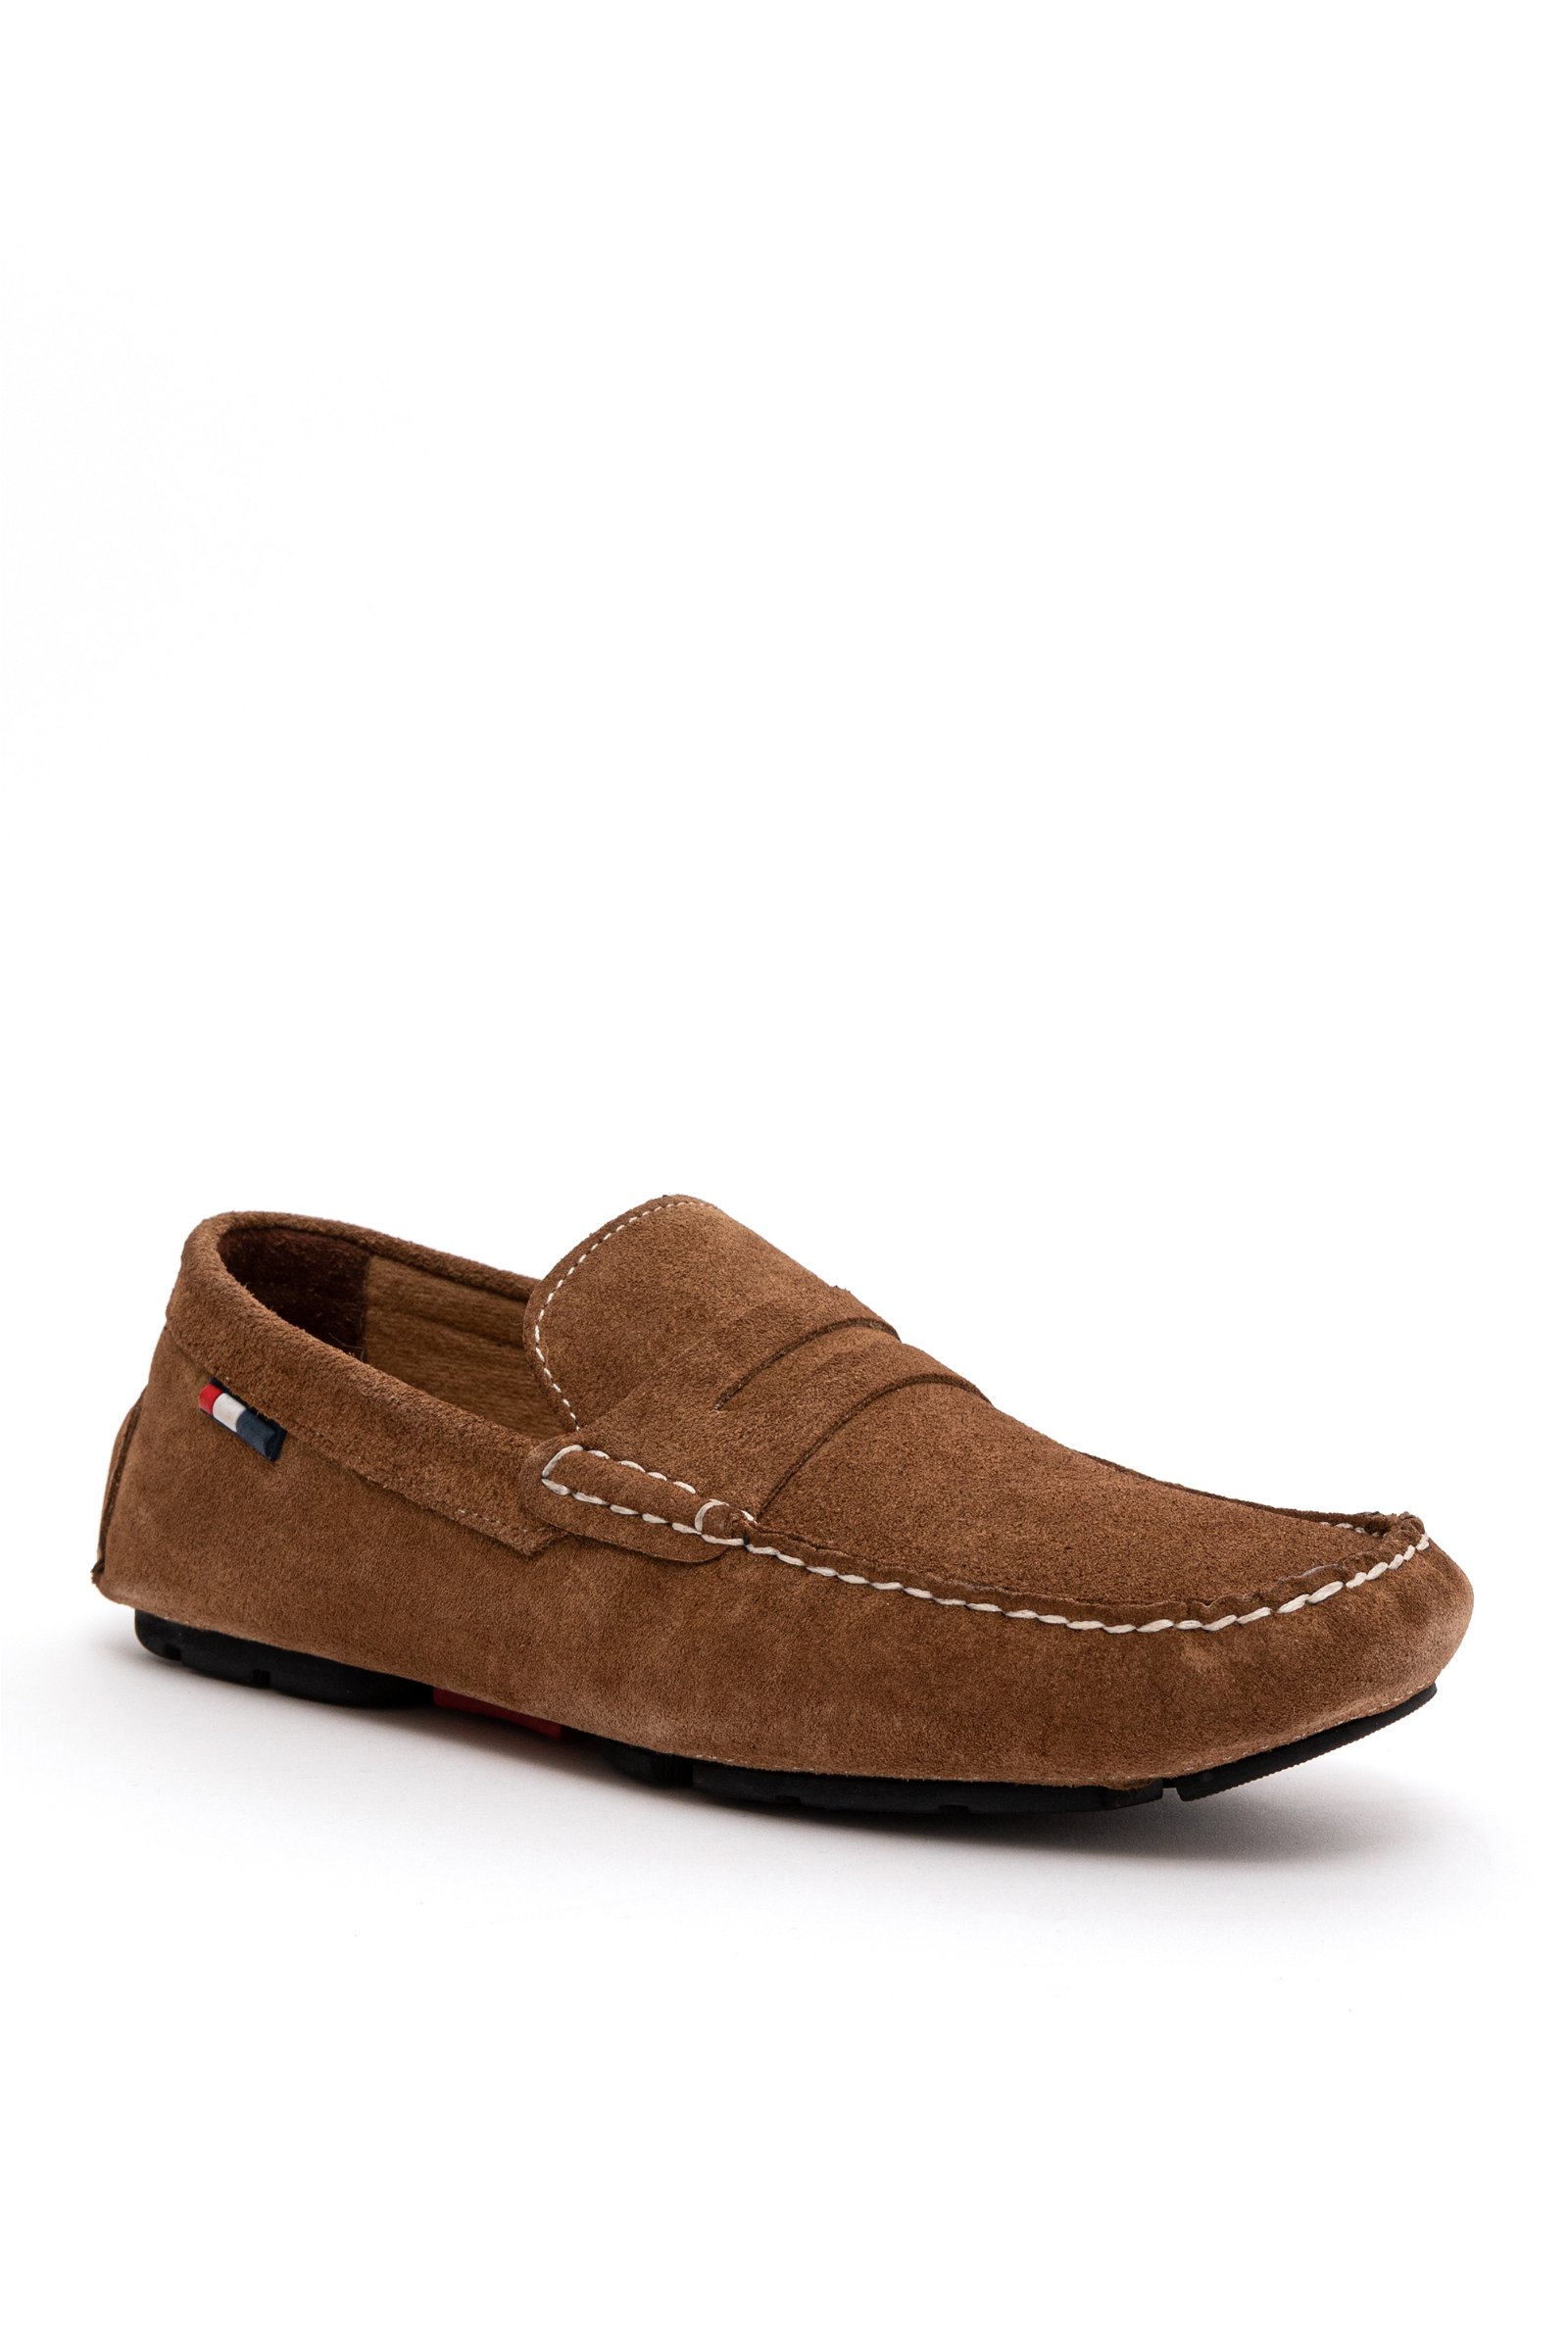 کفش  قهوه ای روشن  استاندارد فیت  مردانه یو اس پولو | US POLO ASSN